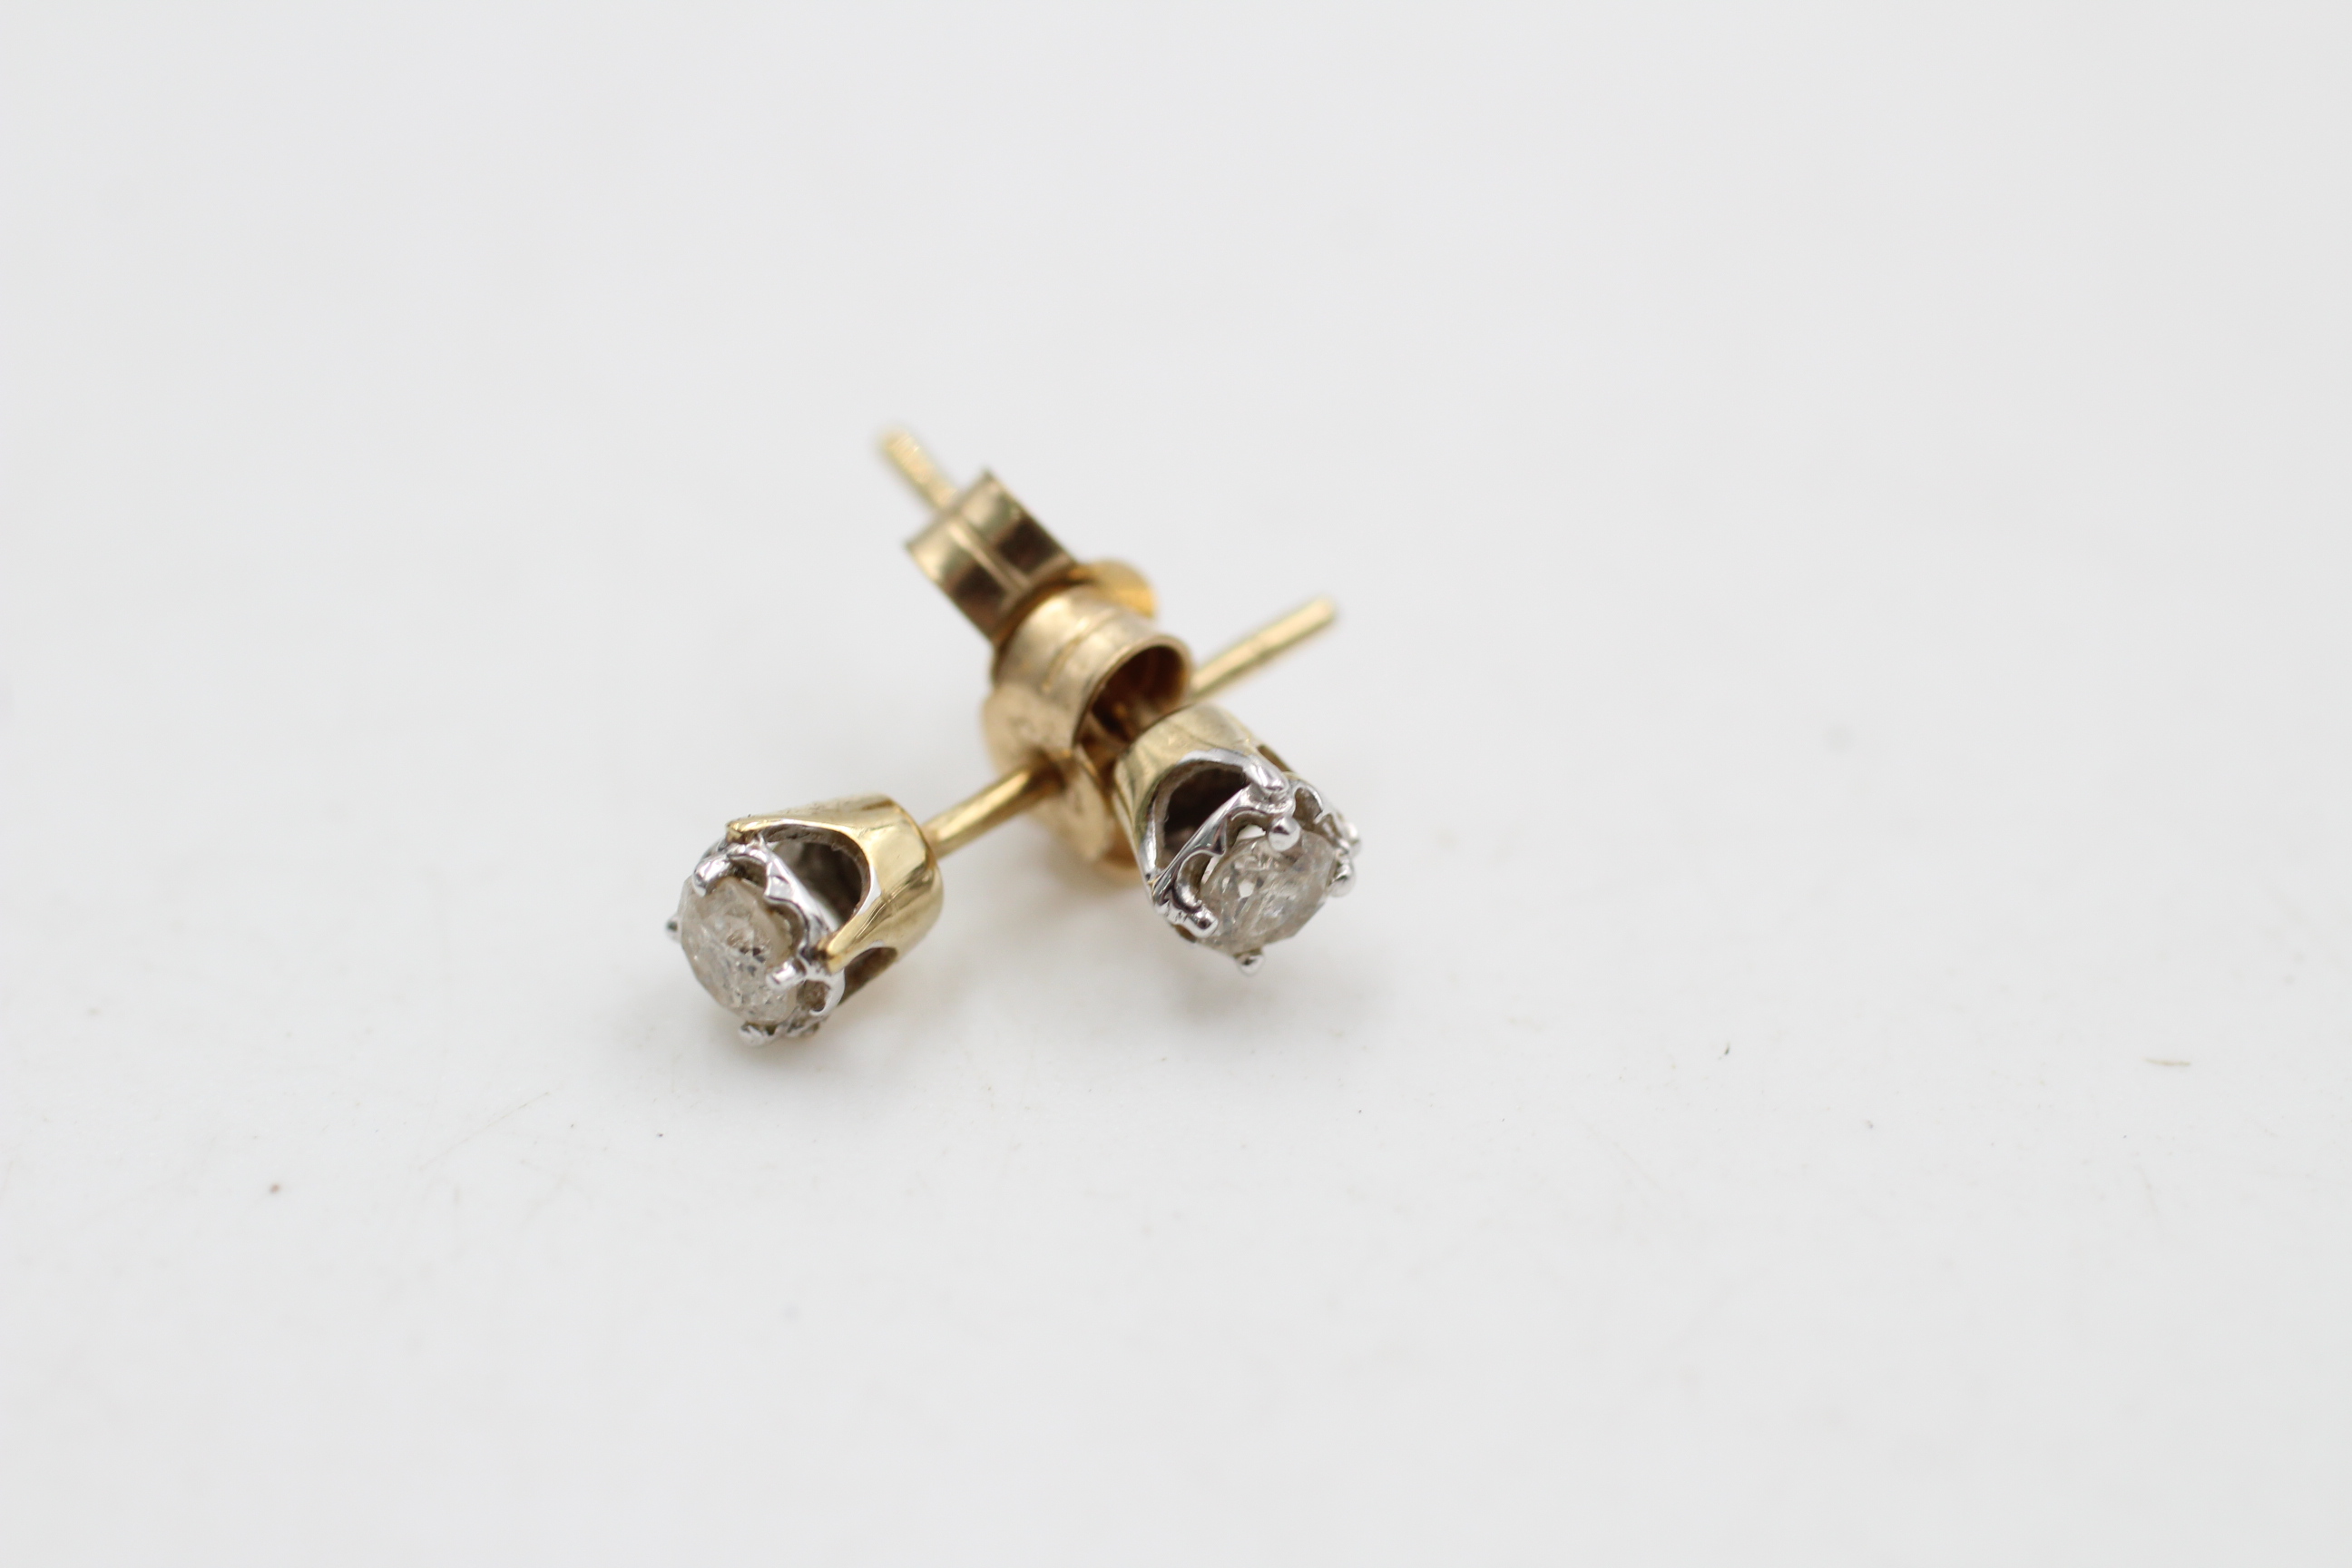 9ct gold diamond stud earrings (0.7g) - Image 3 of 4